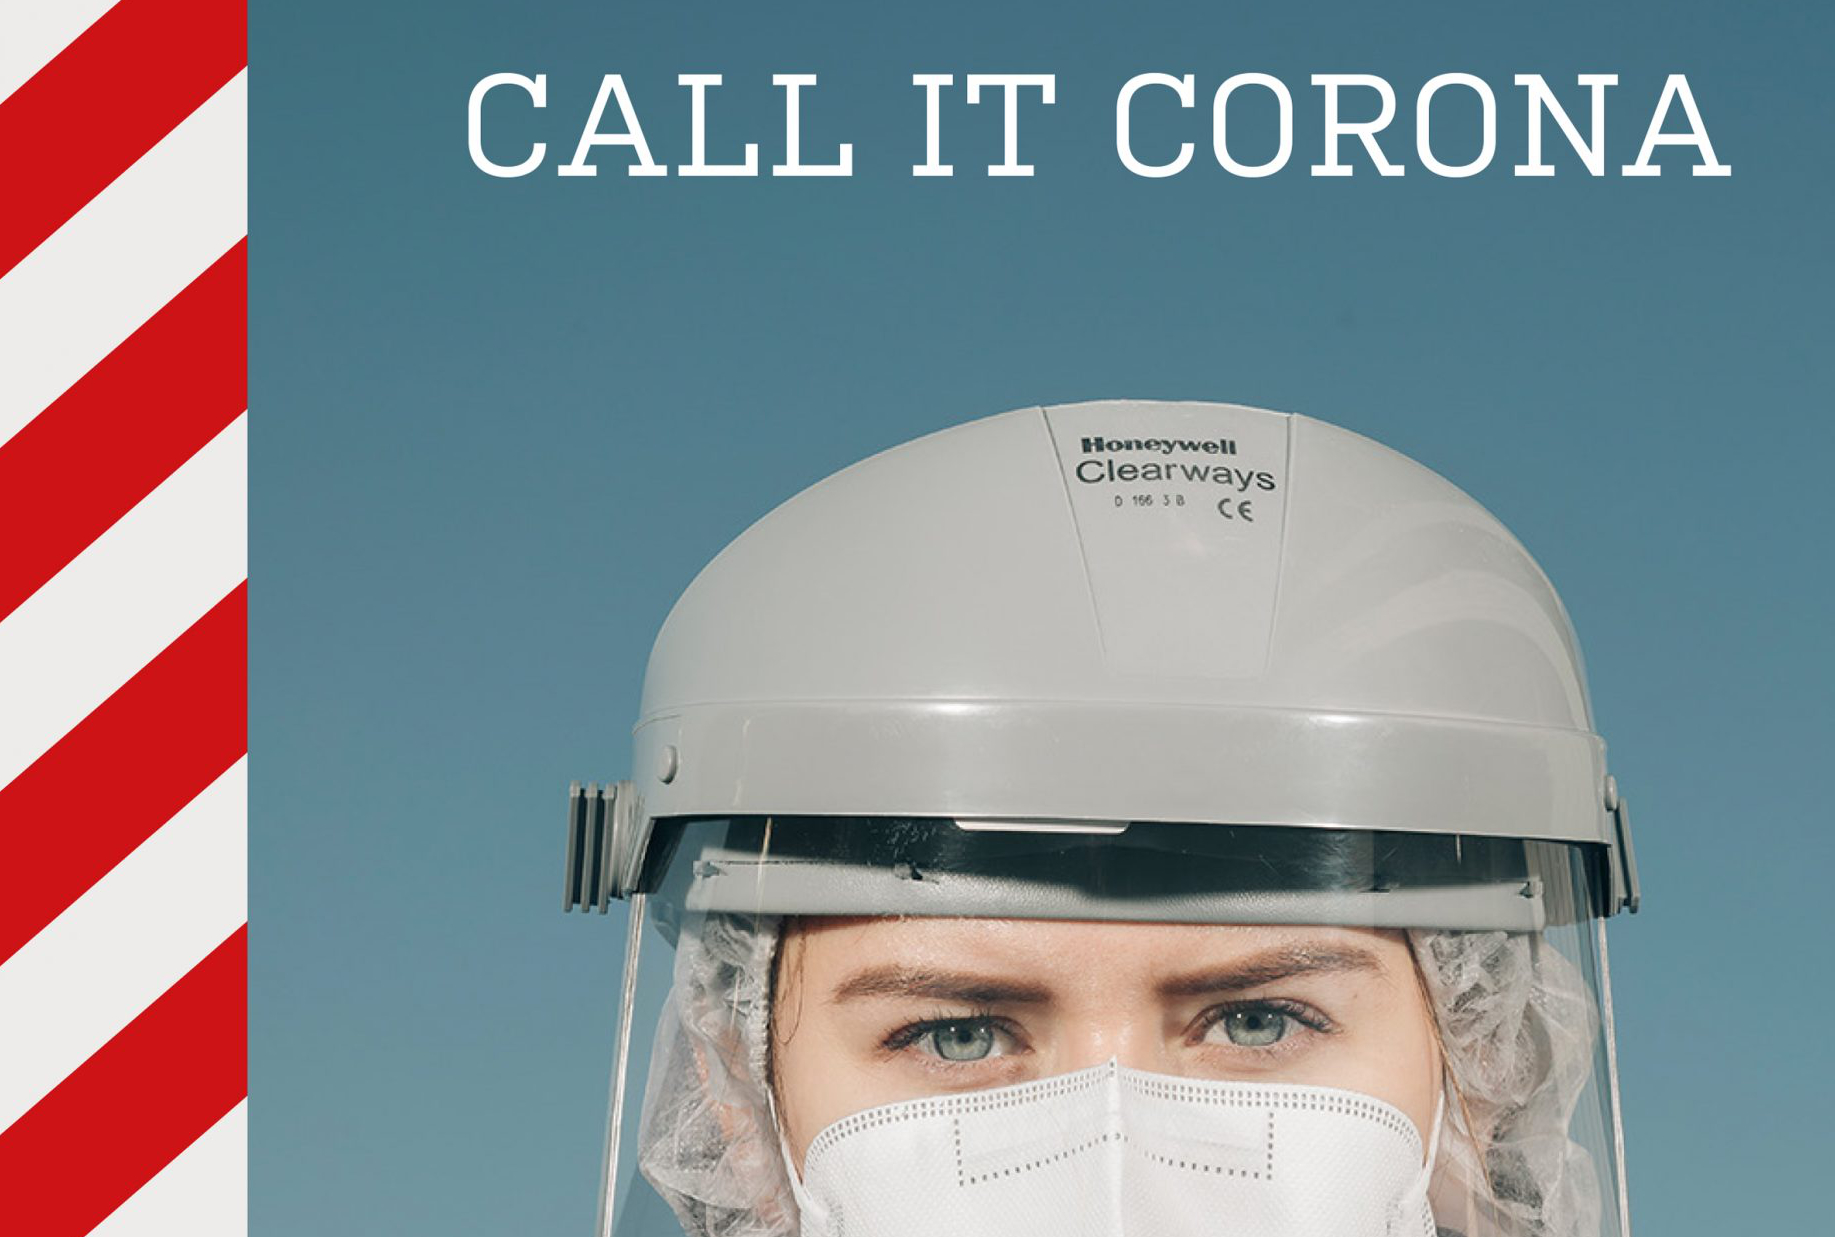 Frankfurter Buchmesse: CALL IT CORONA - Fotografische Facetten der Pandemie